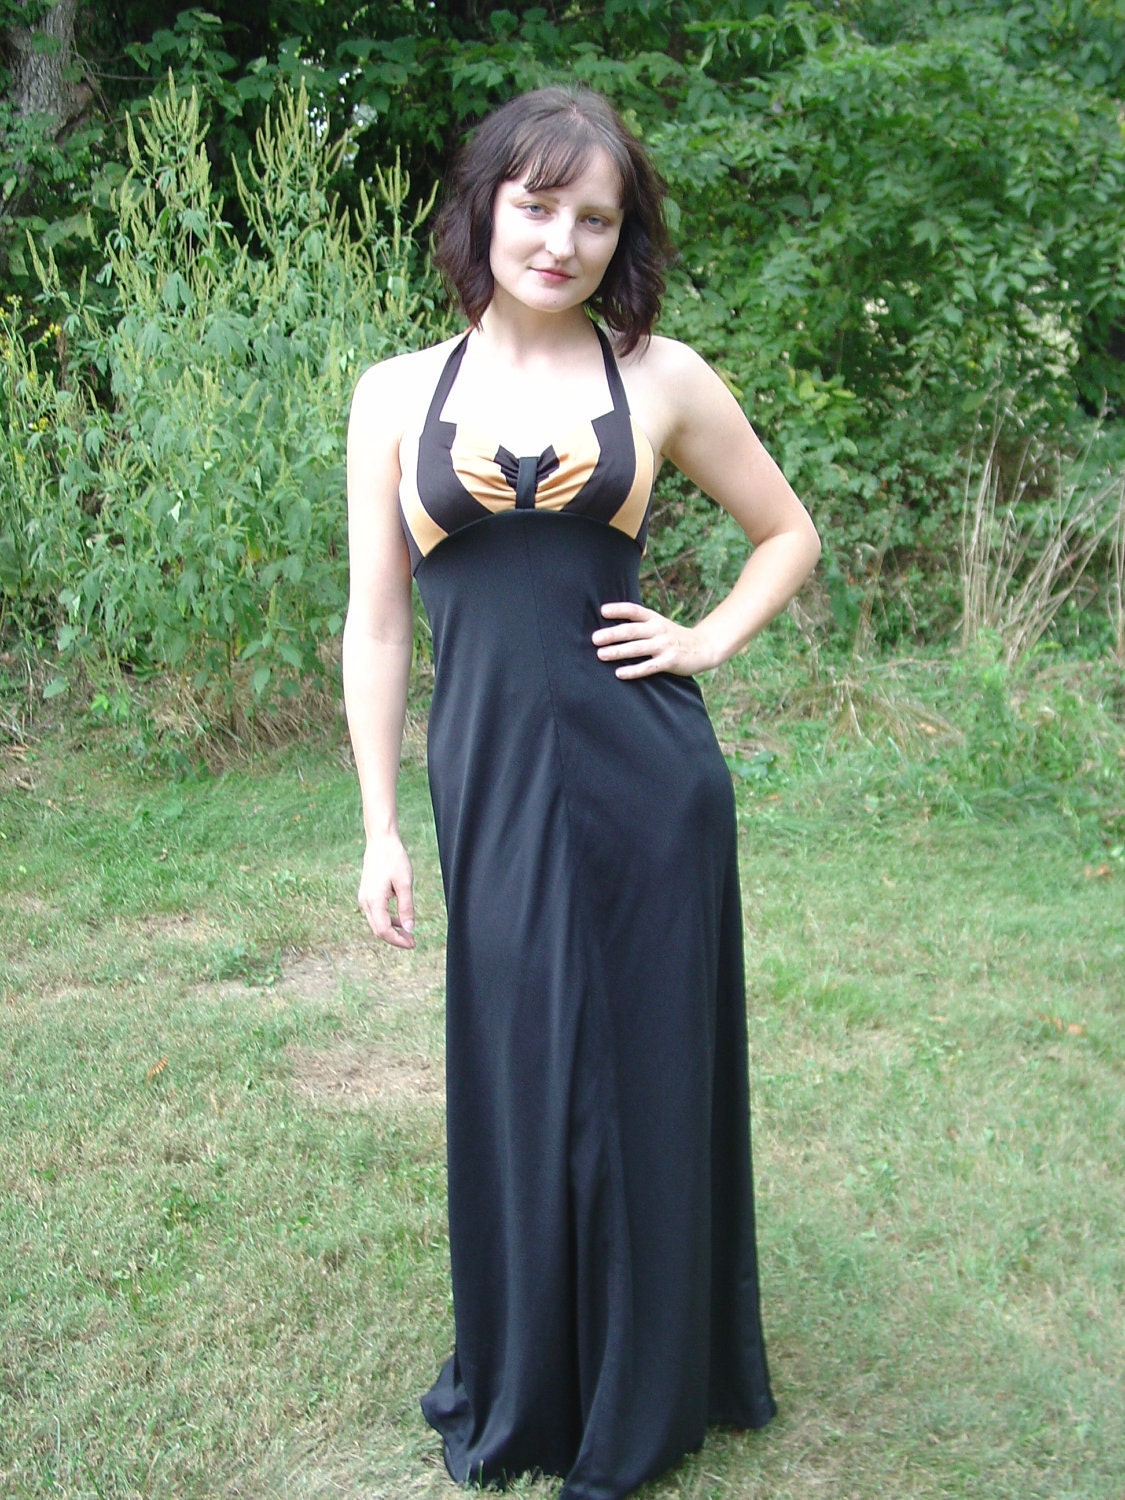 PA PA POWER Vintage Black and Orange Halter Dress